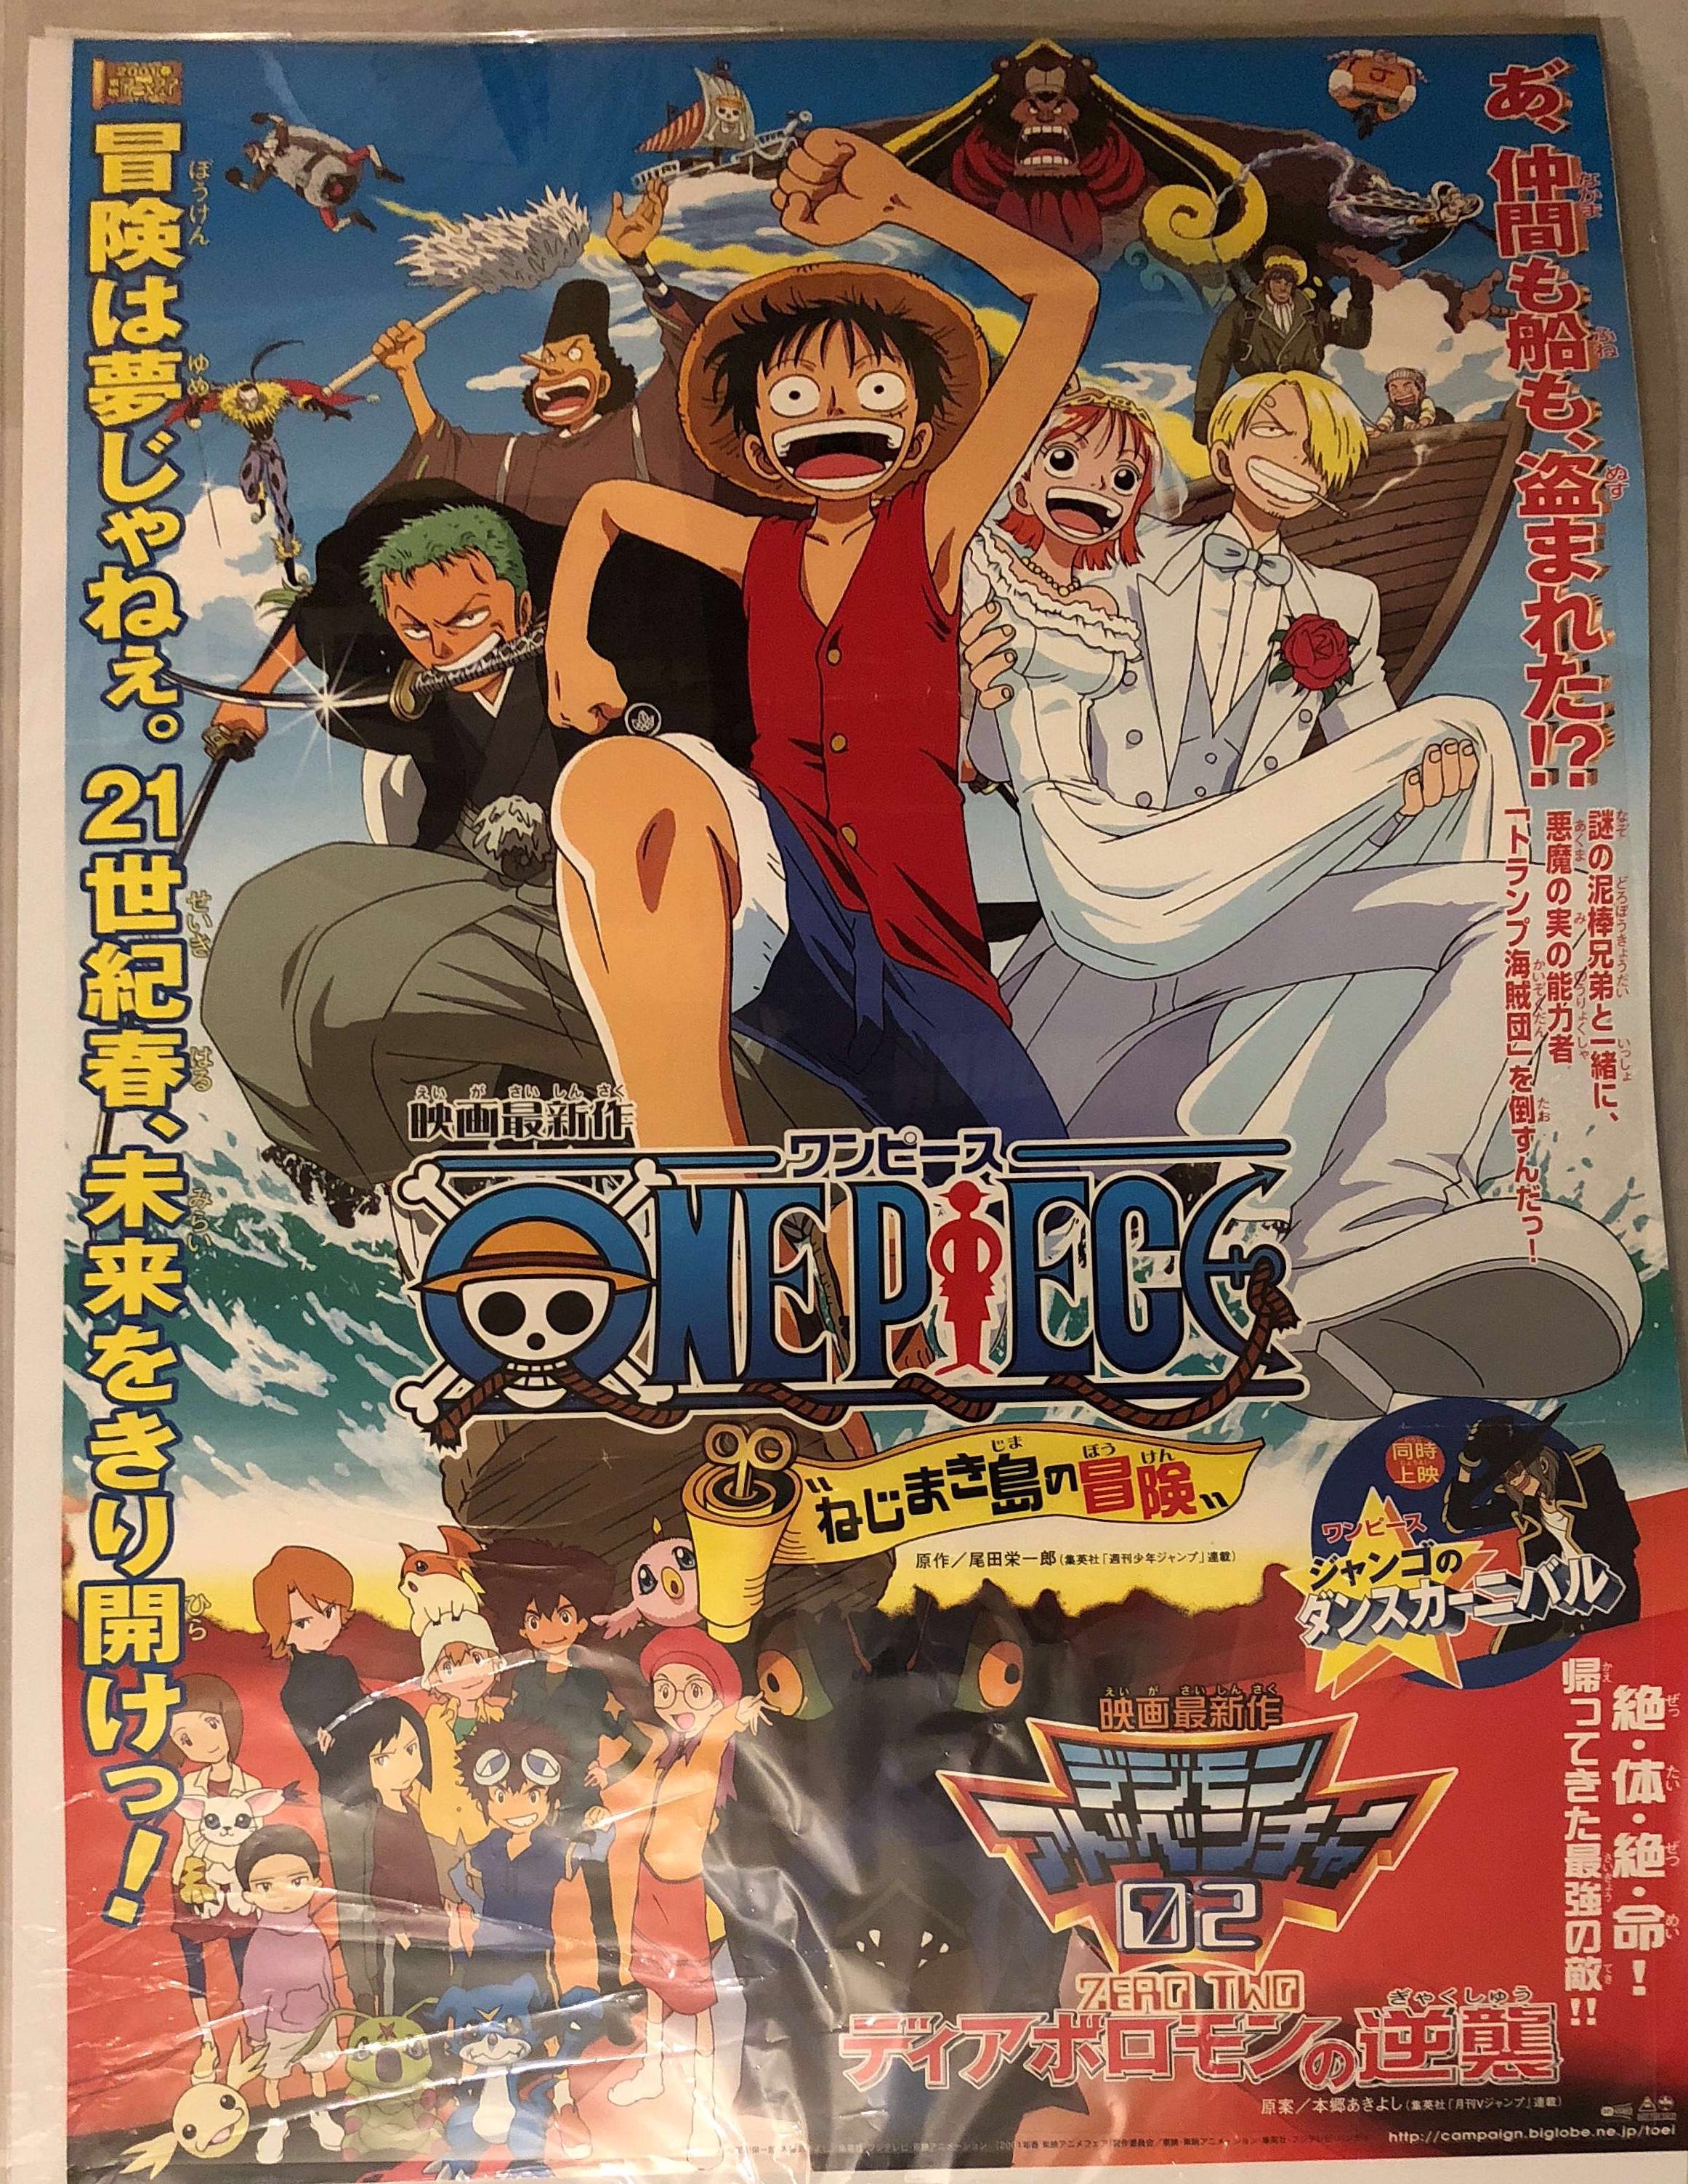 Toei Theatre Item One Piece Nejimaki Island Adventure Digimon Adventure 02 B2 Poster Mandarake Online Shop